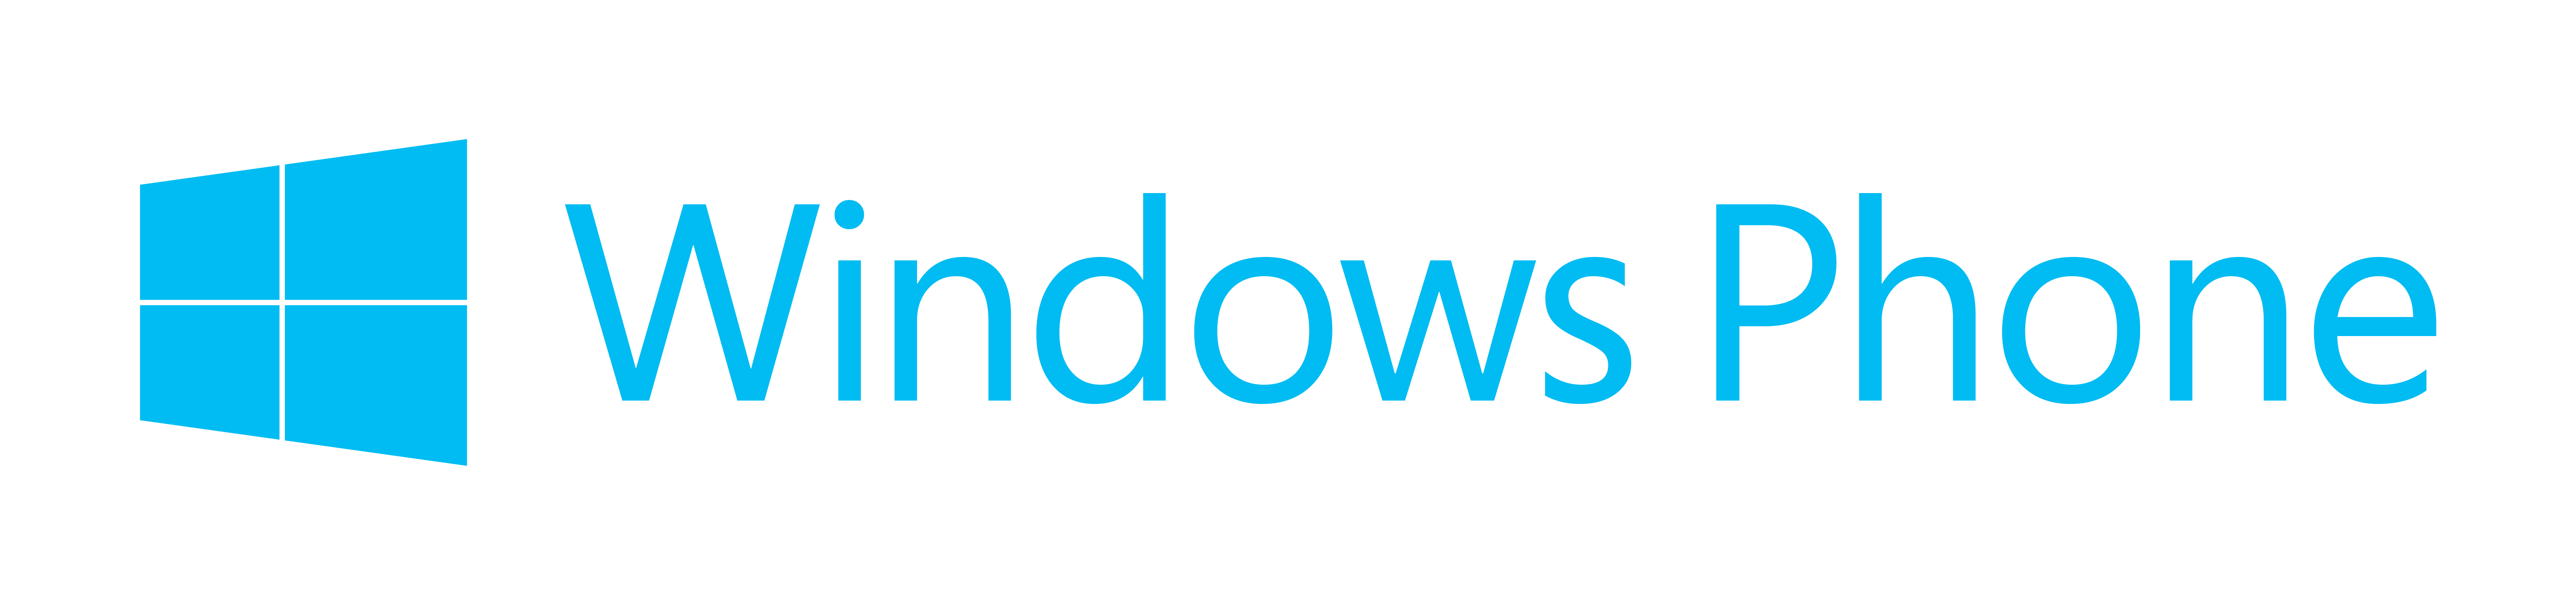 Windows Phone 7 Logo - Windows Phone App Logo Png Image